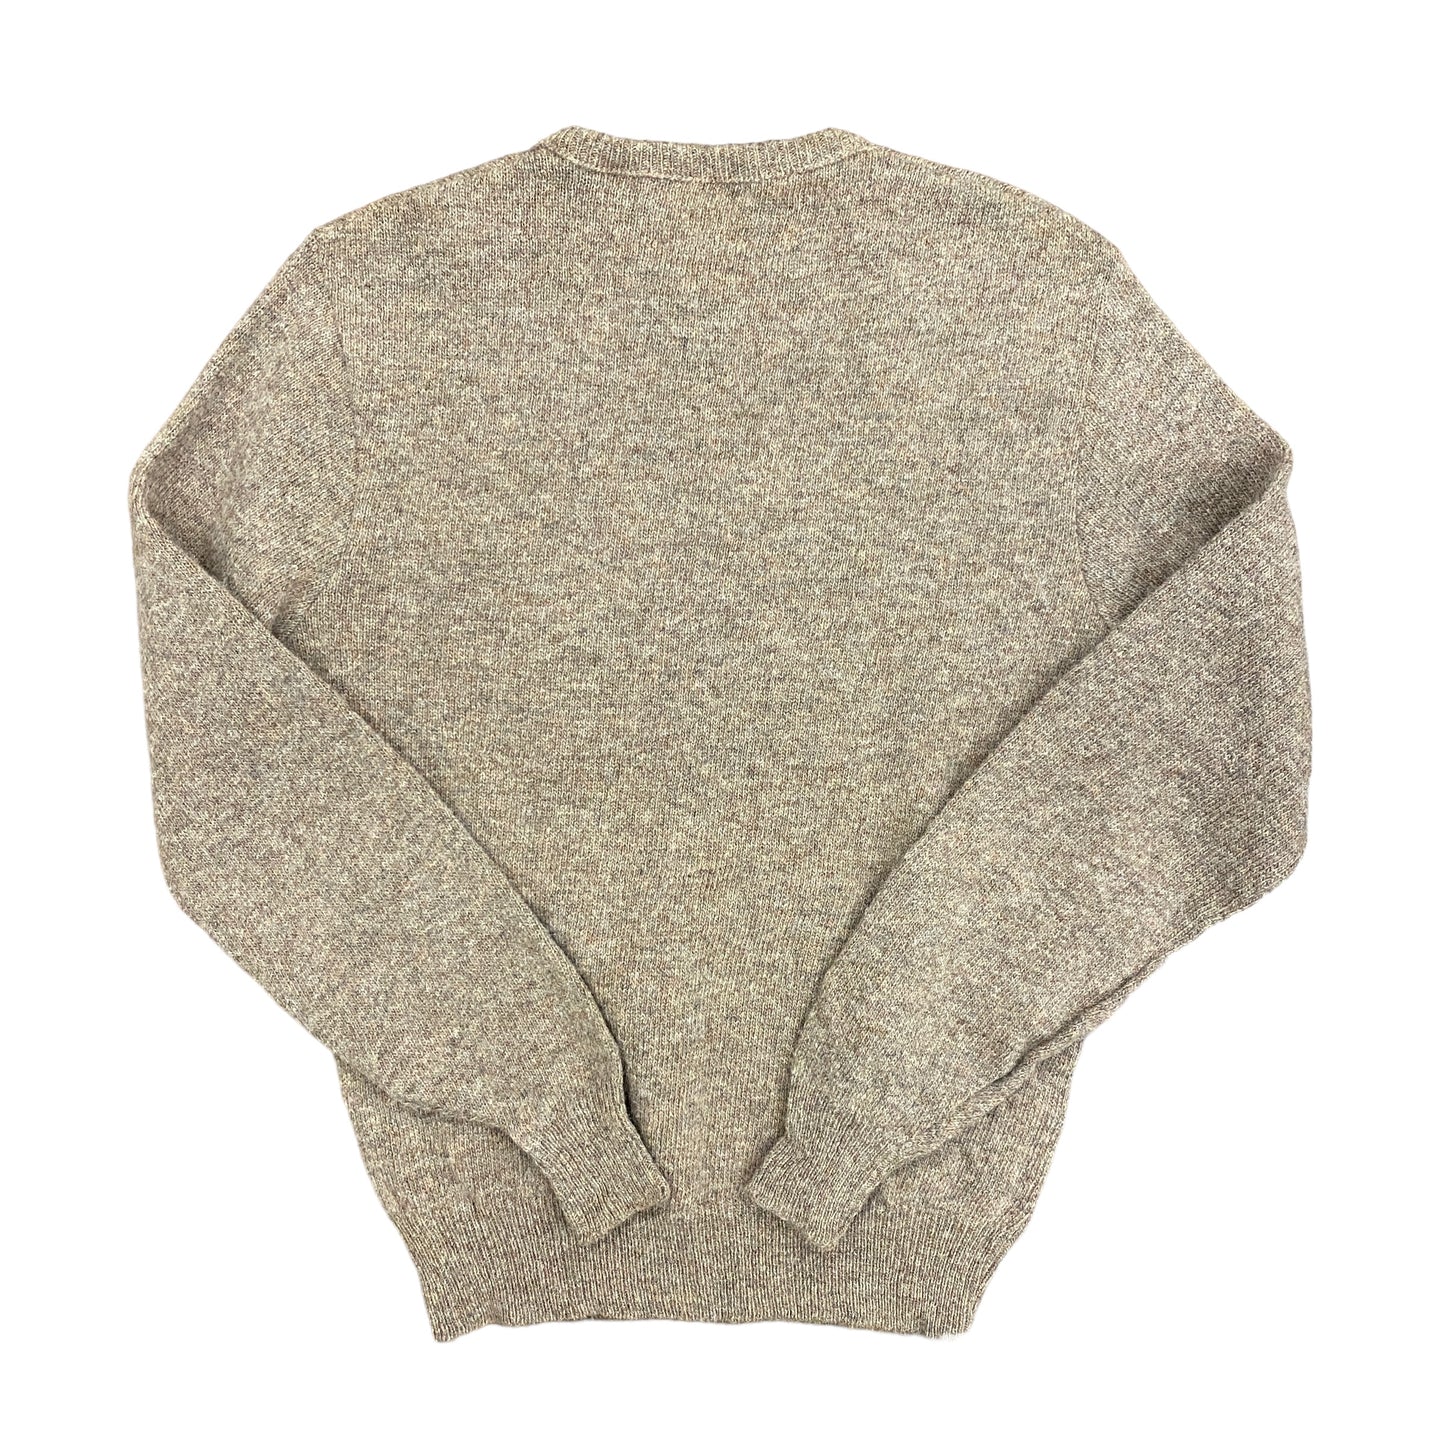 NWT 80s Le Tigre Brown Wool Sweater - Size Medium